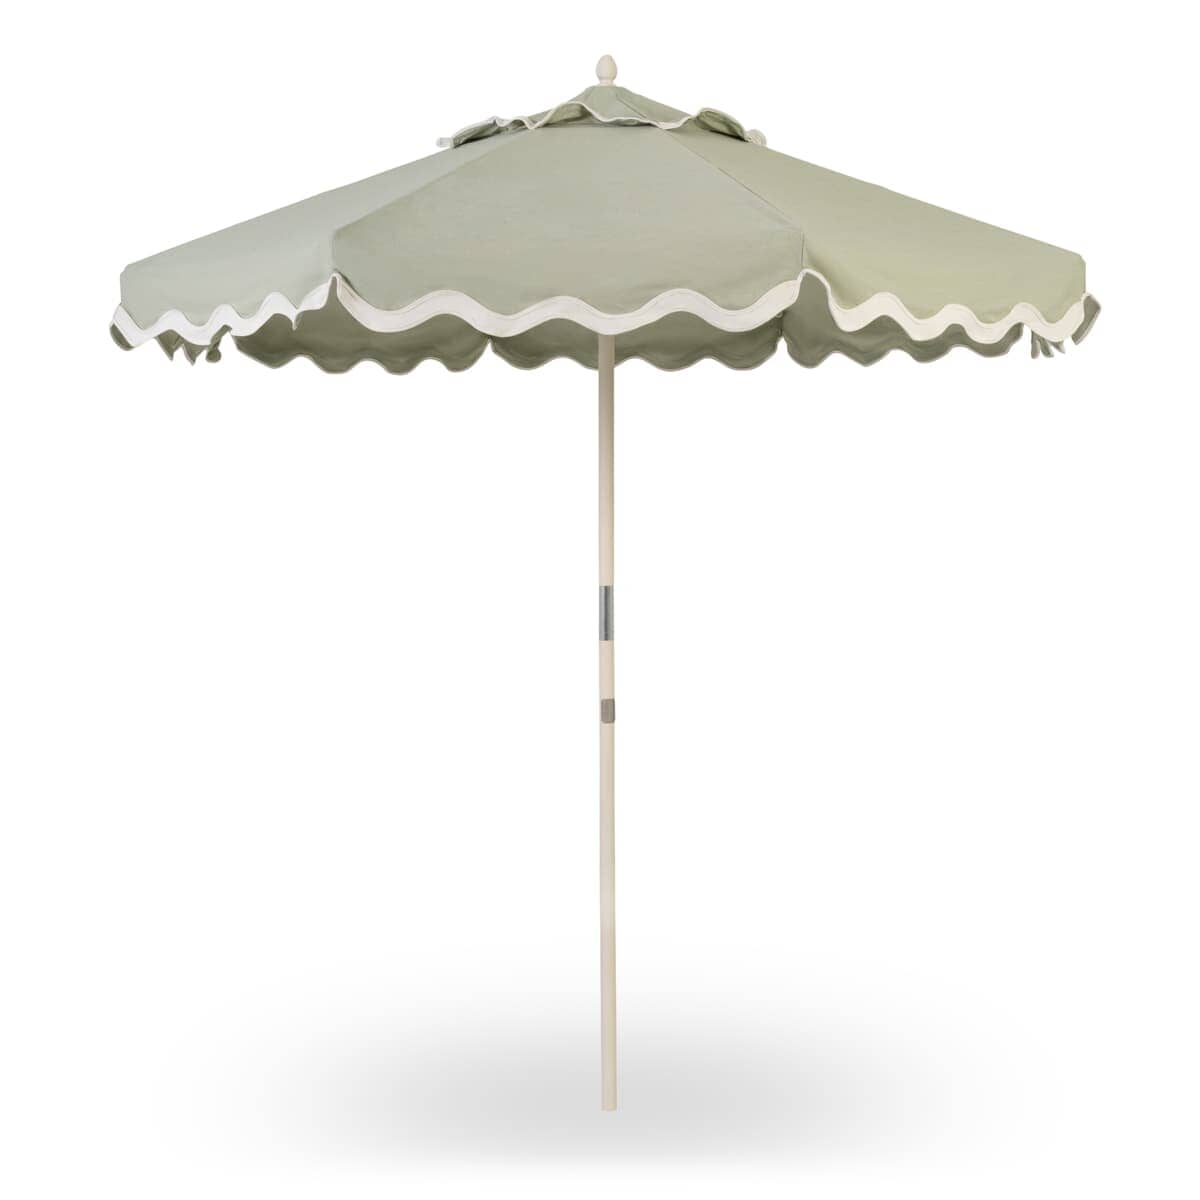 Studio image of green market umbrella